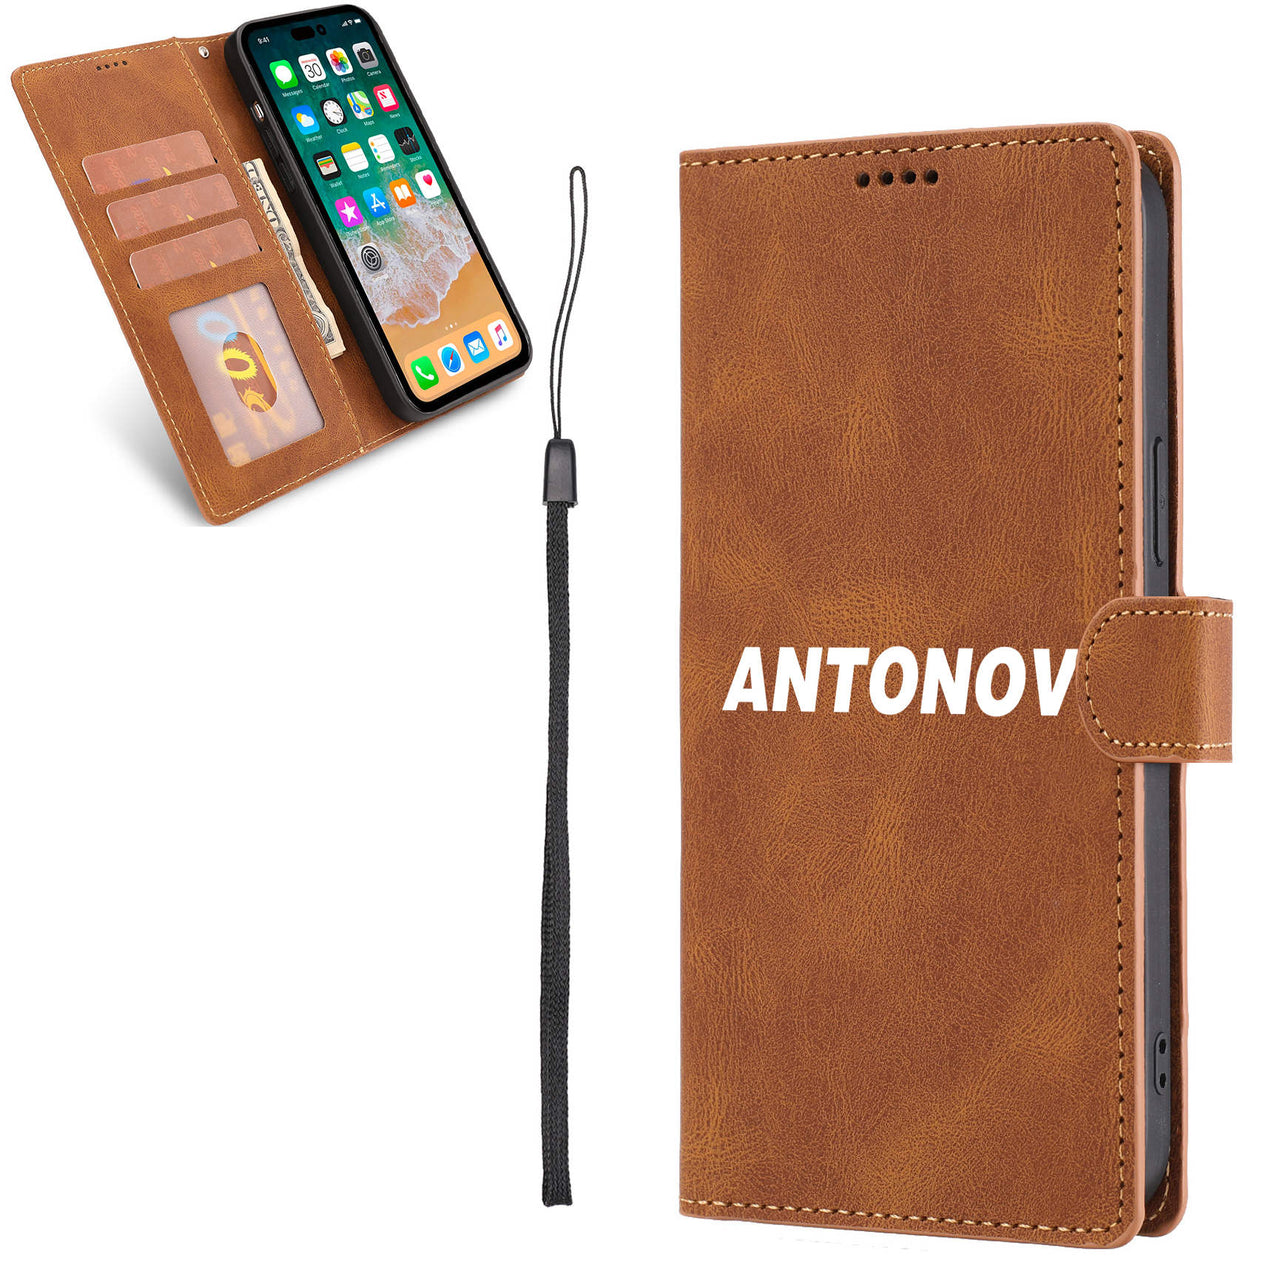 Antonov & Text Designed Leather iPhone Cases